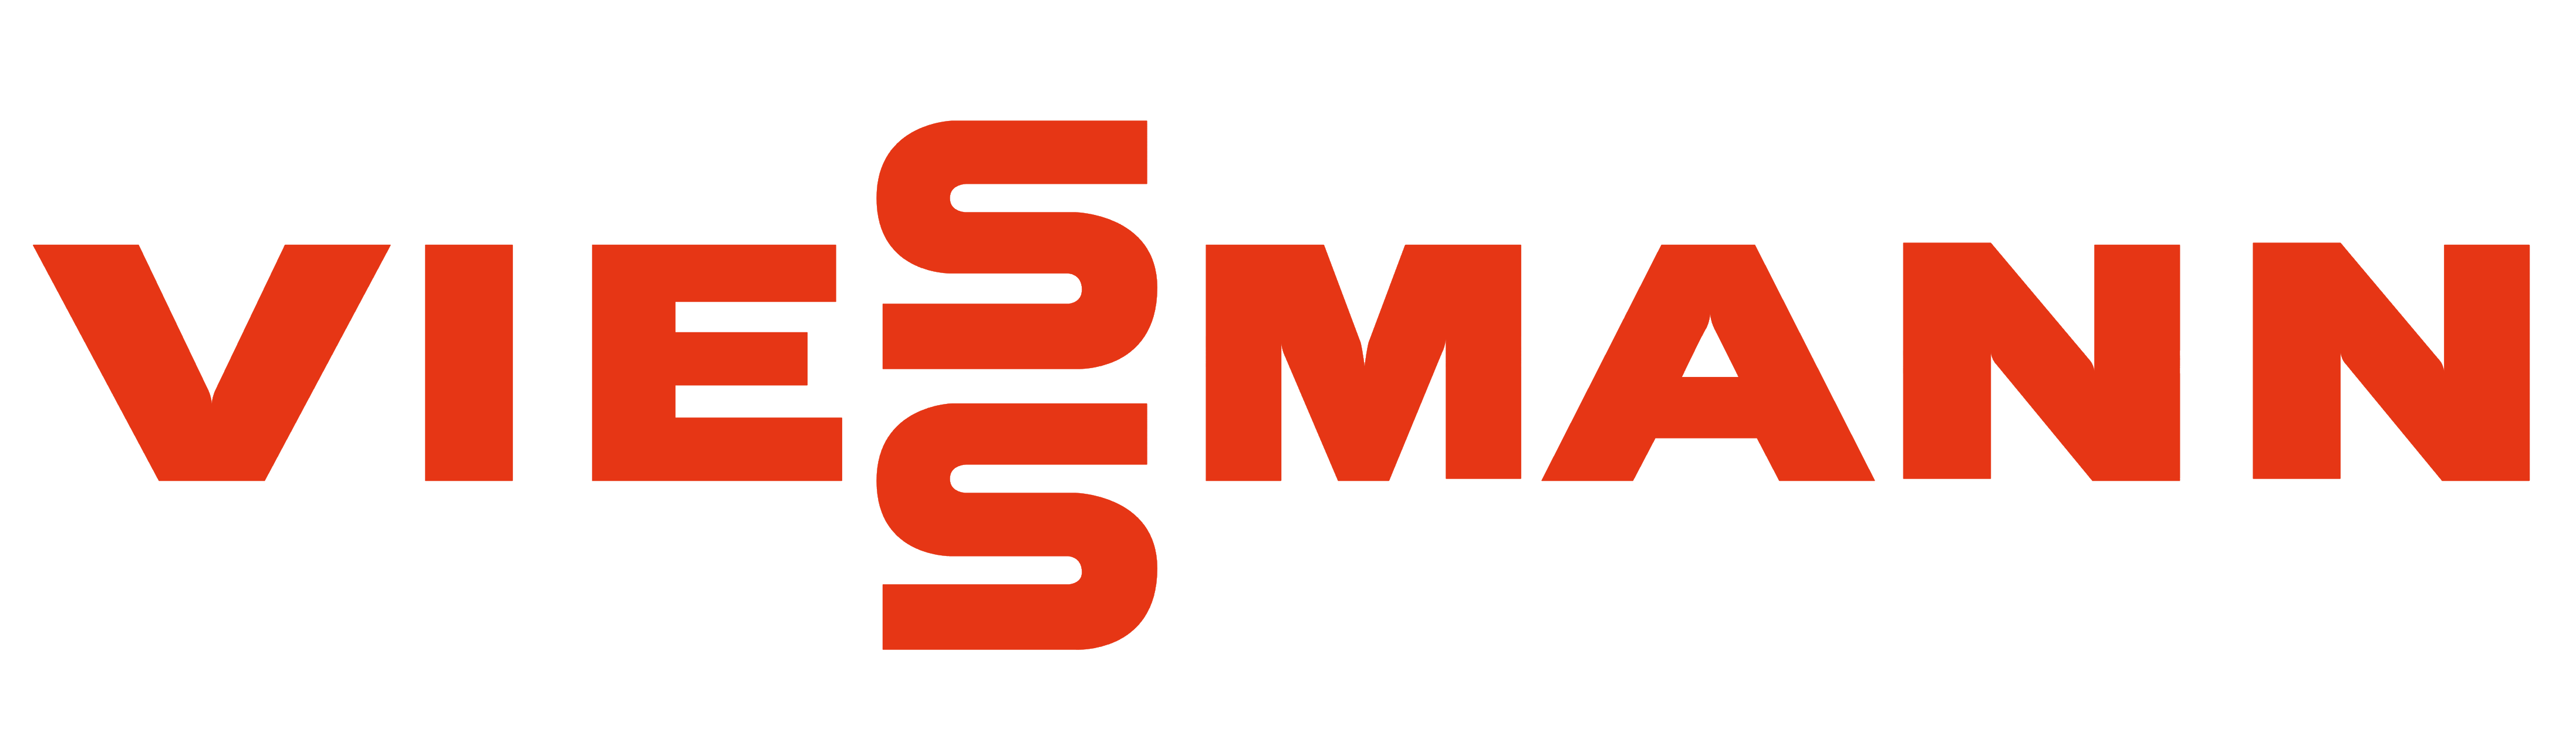 Viessmann logo, logotype